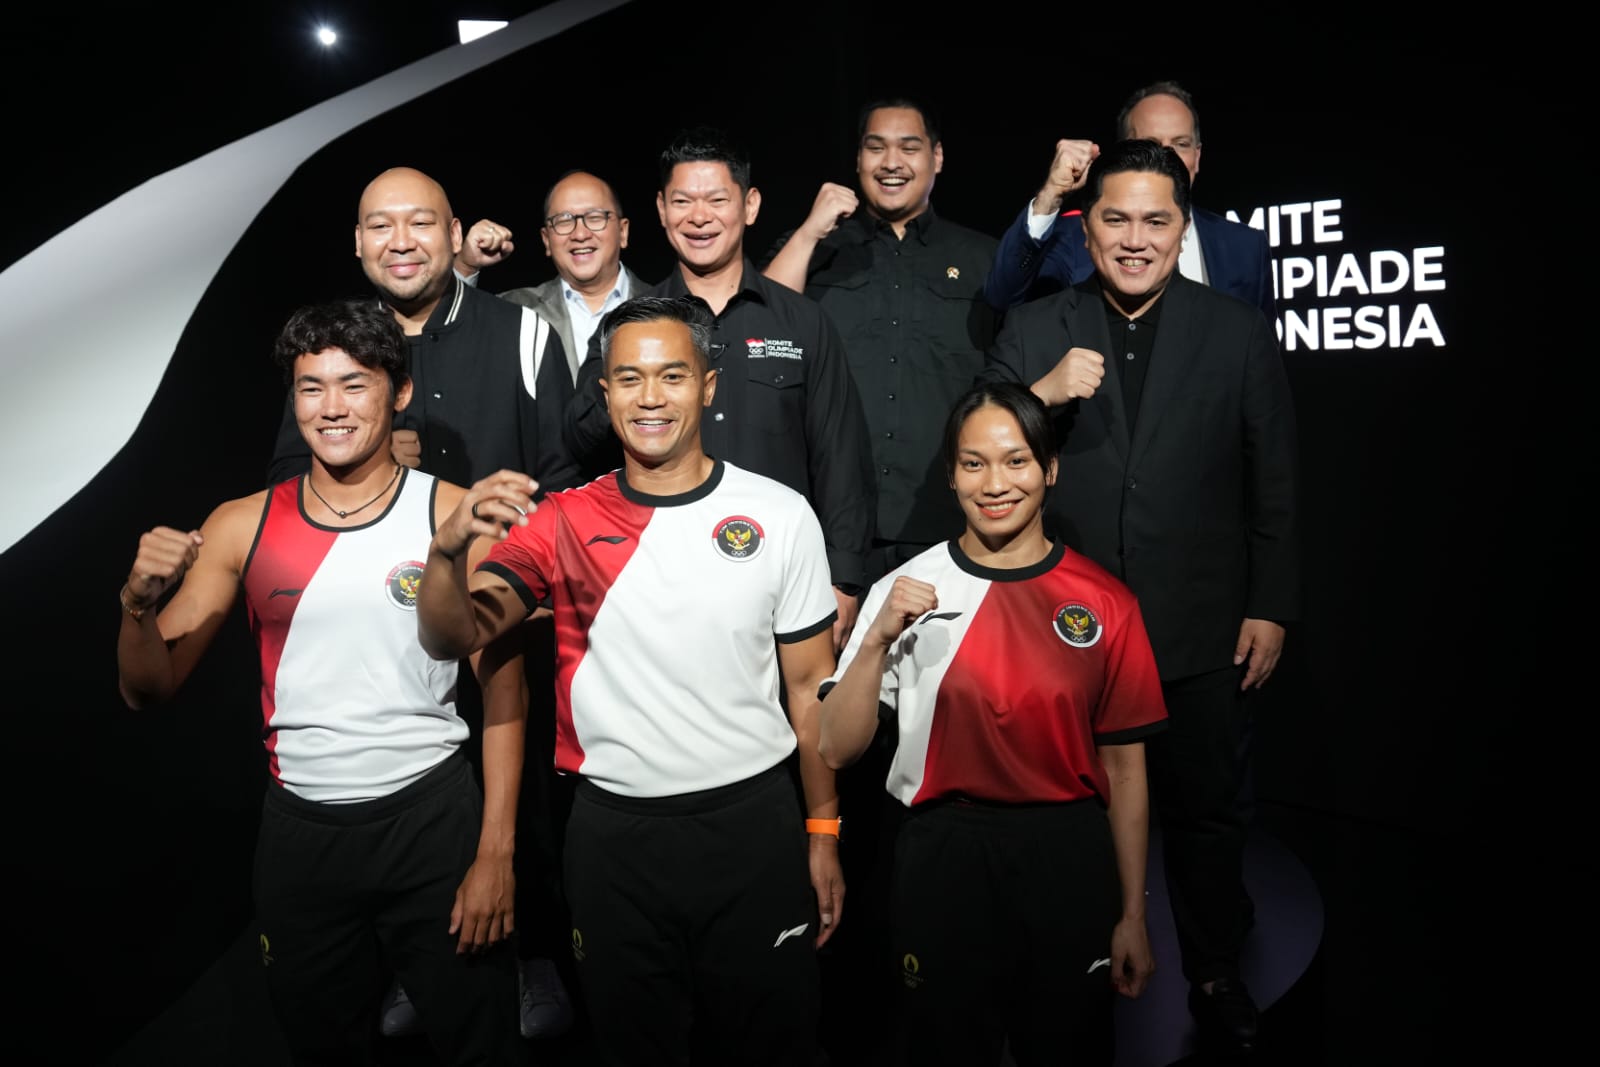 Jersey timnas Indonesia yang didesain langsung oleh desainer Tanah Air Didit Hediprasetyo (SinPo.id/Kemenpora)